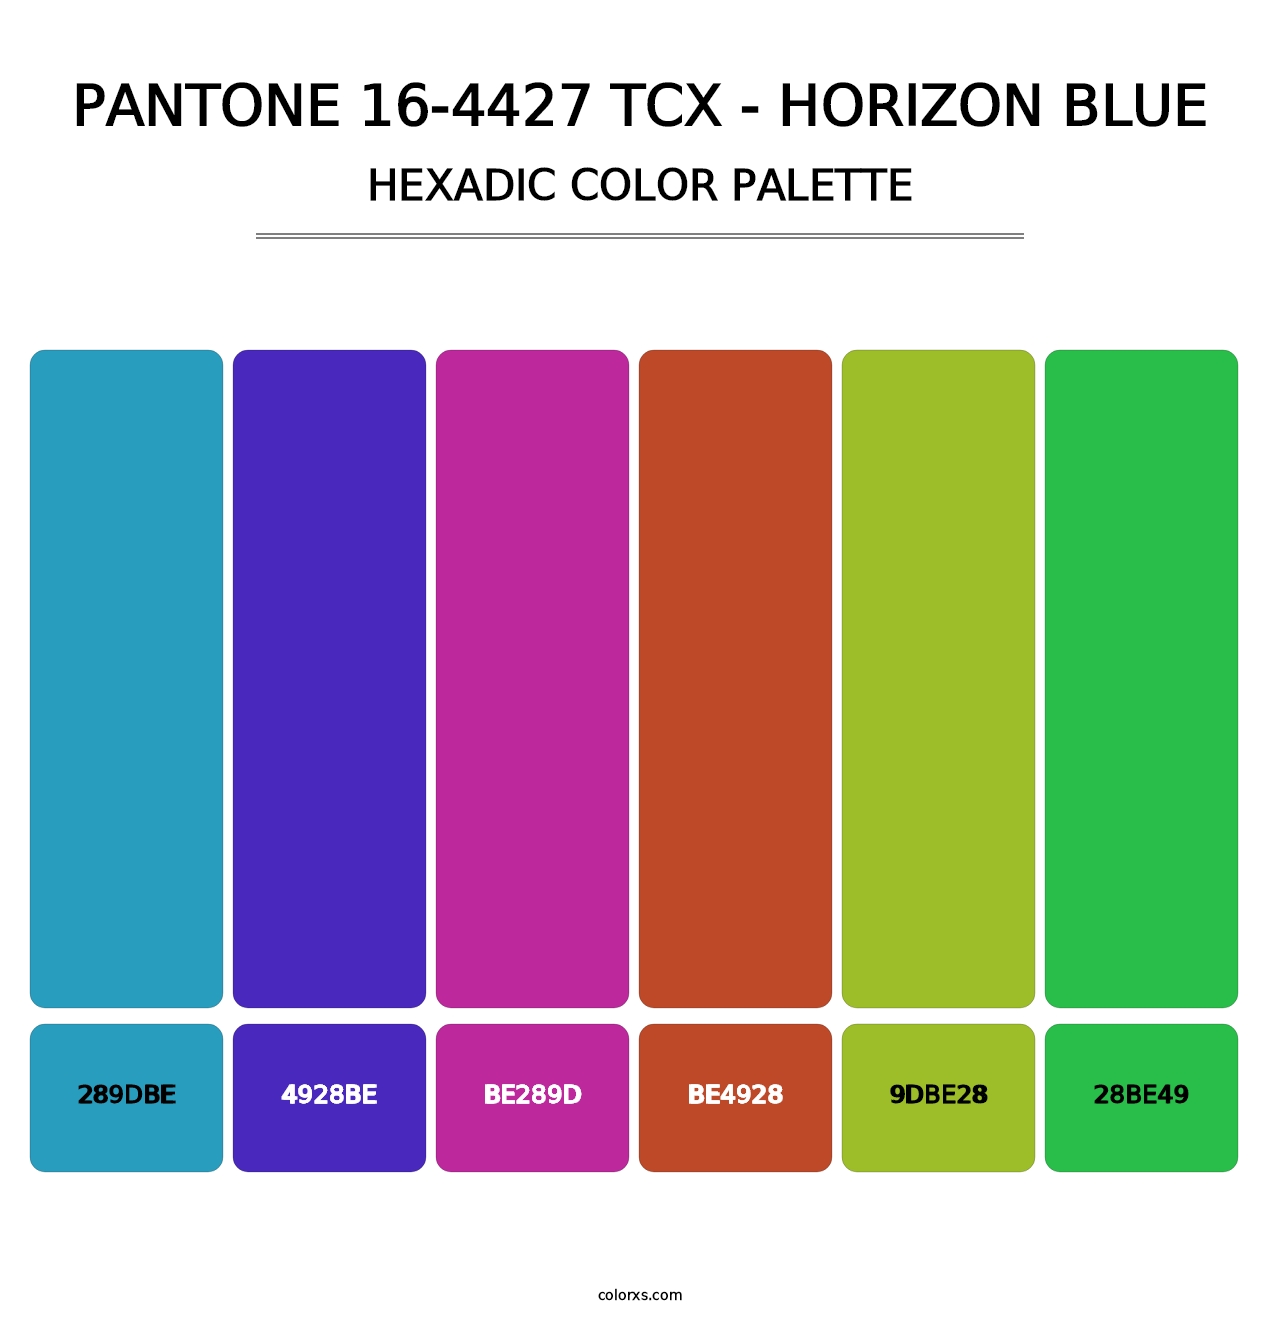 PANTONE 16-4427 TCX - Horizon Blue - Hexadic Color Palette